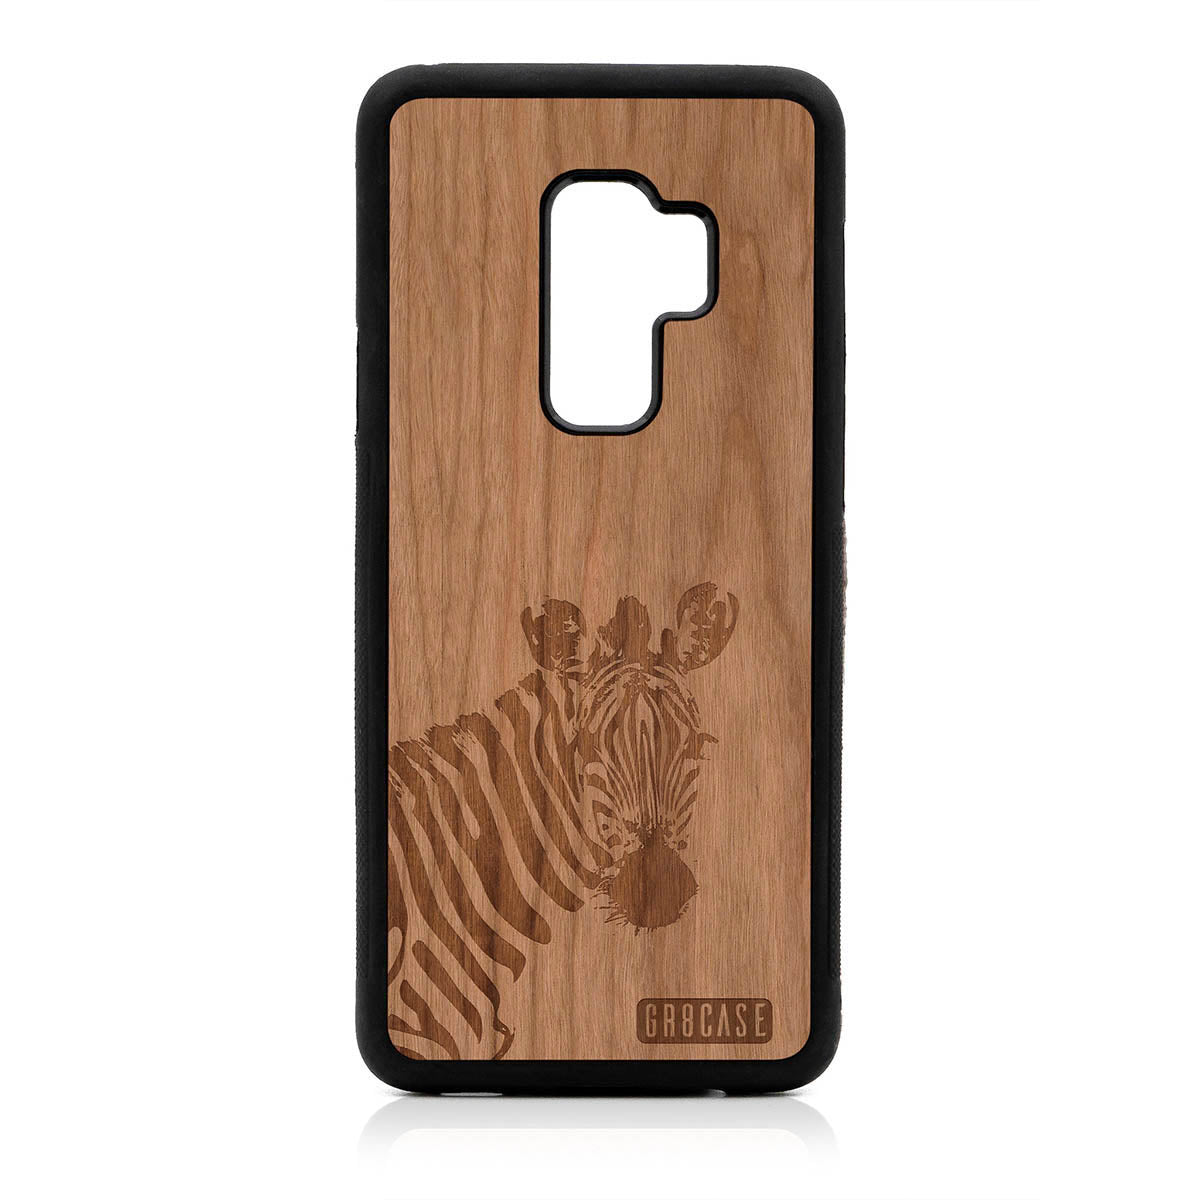 Lookout Zebra Design Wood Case For Samsung Galaxy S9 Plus